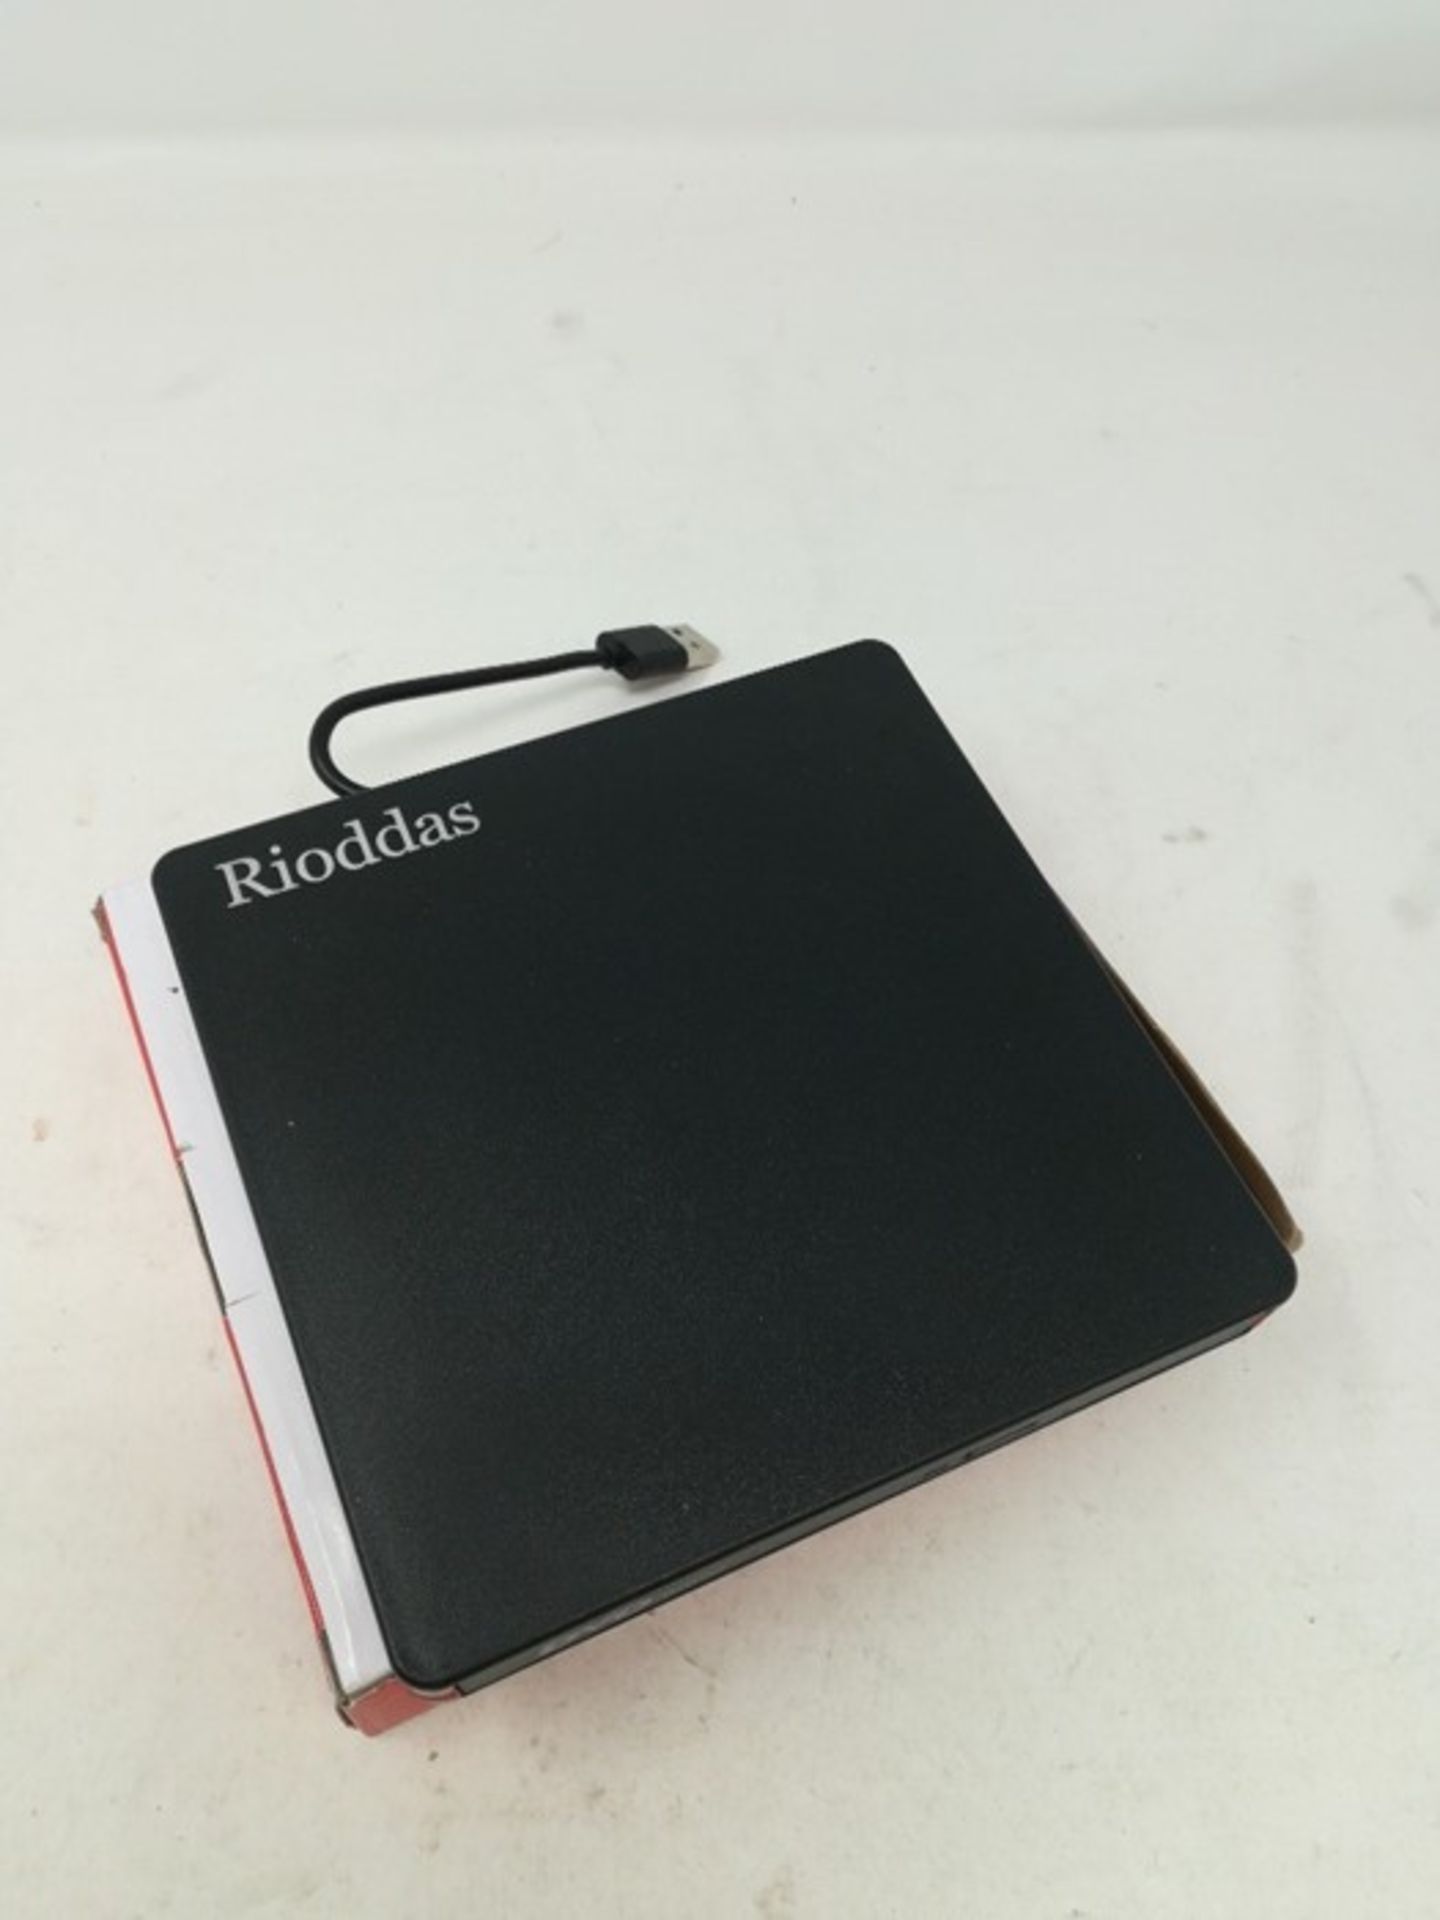 Rioddas External CD Drive, USB 3.0 Portable CD/DVD +/-Rw Drive Slim Dvd/CD - Image 2 of 2